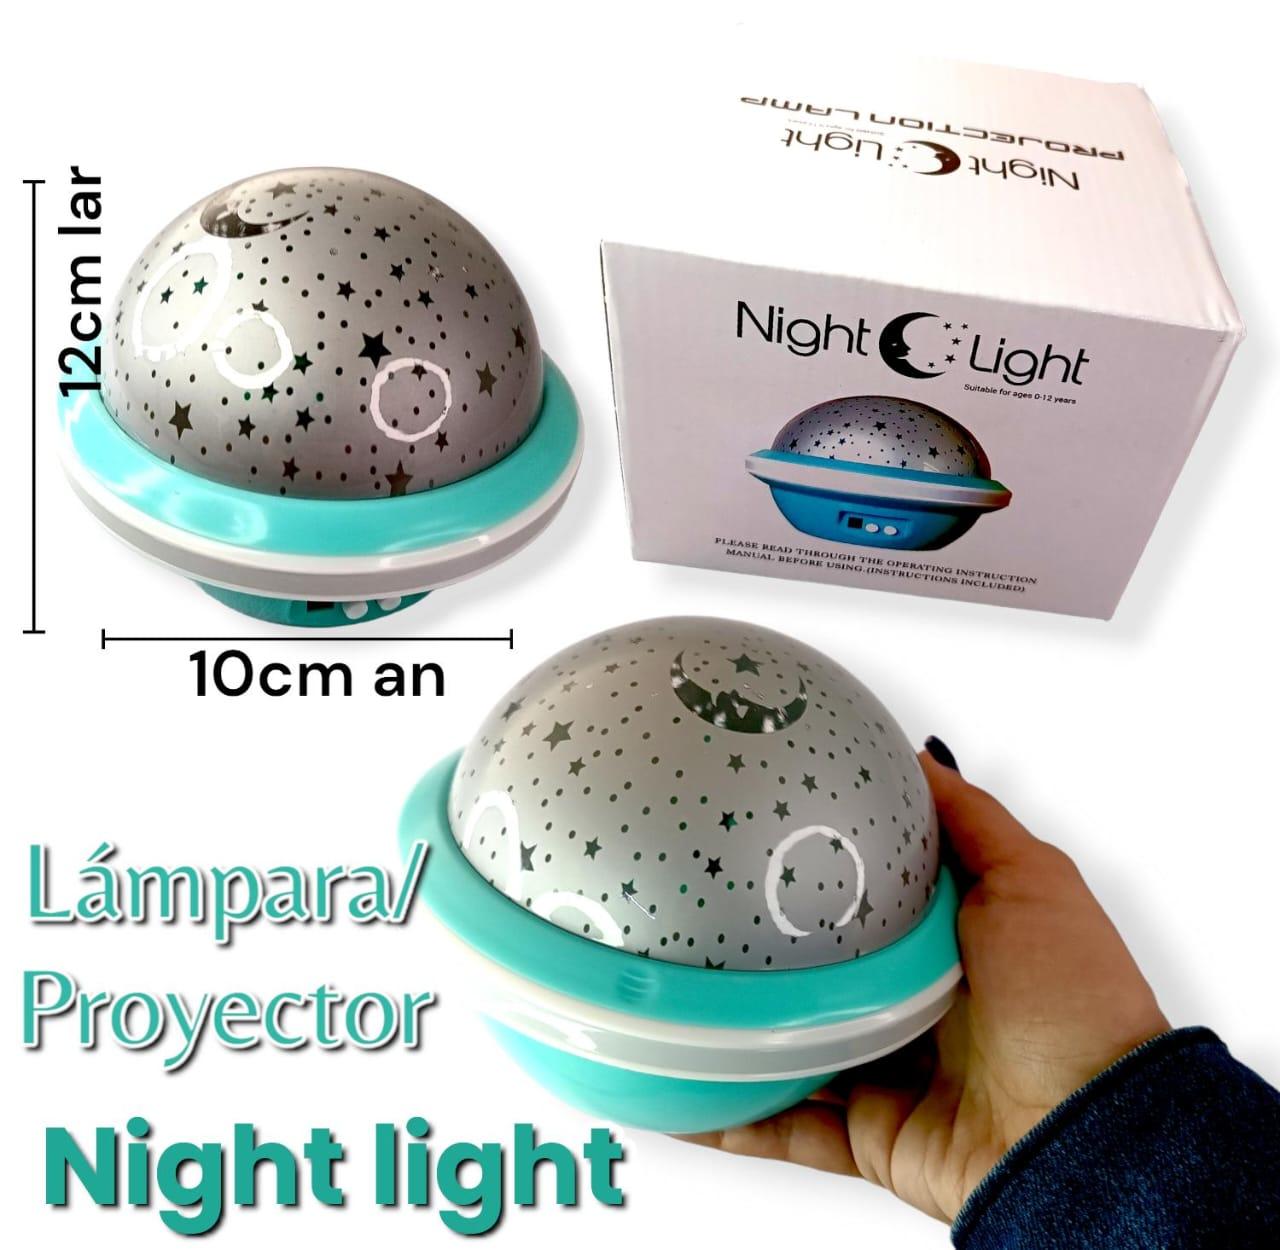 Lampara / Proyector Night Light